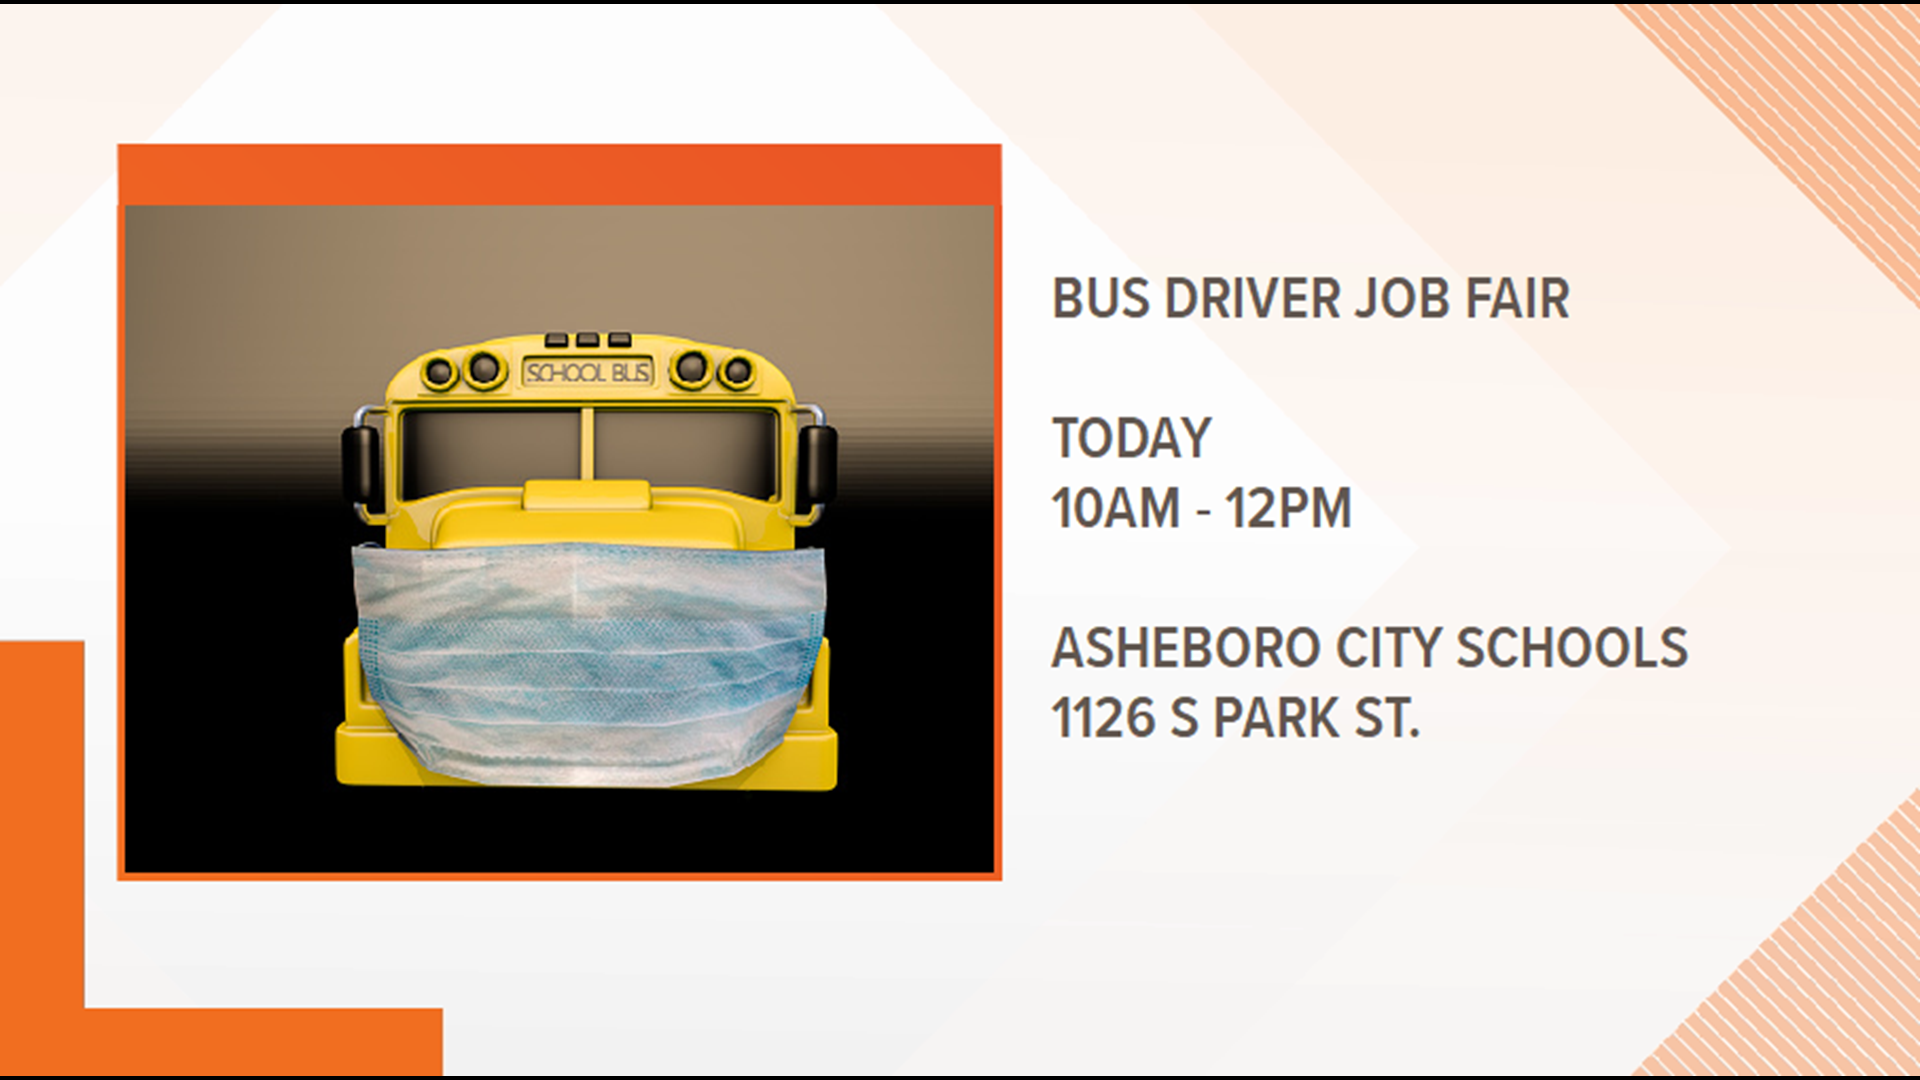 Asheboro City Schools holding bus driver job fair on Wednesday.